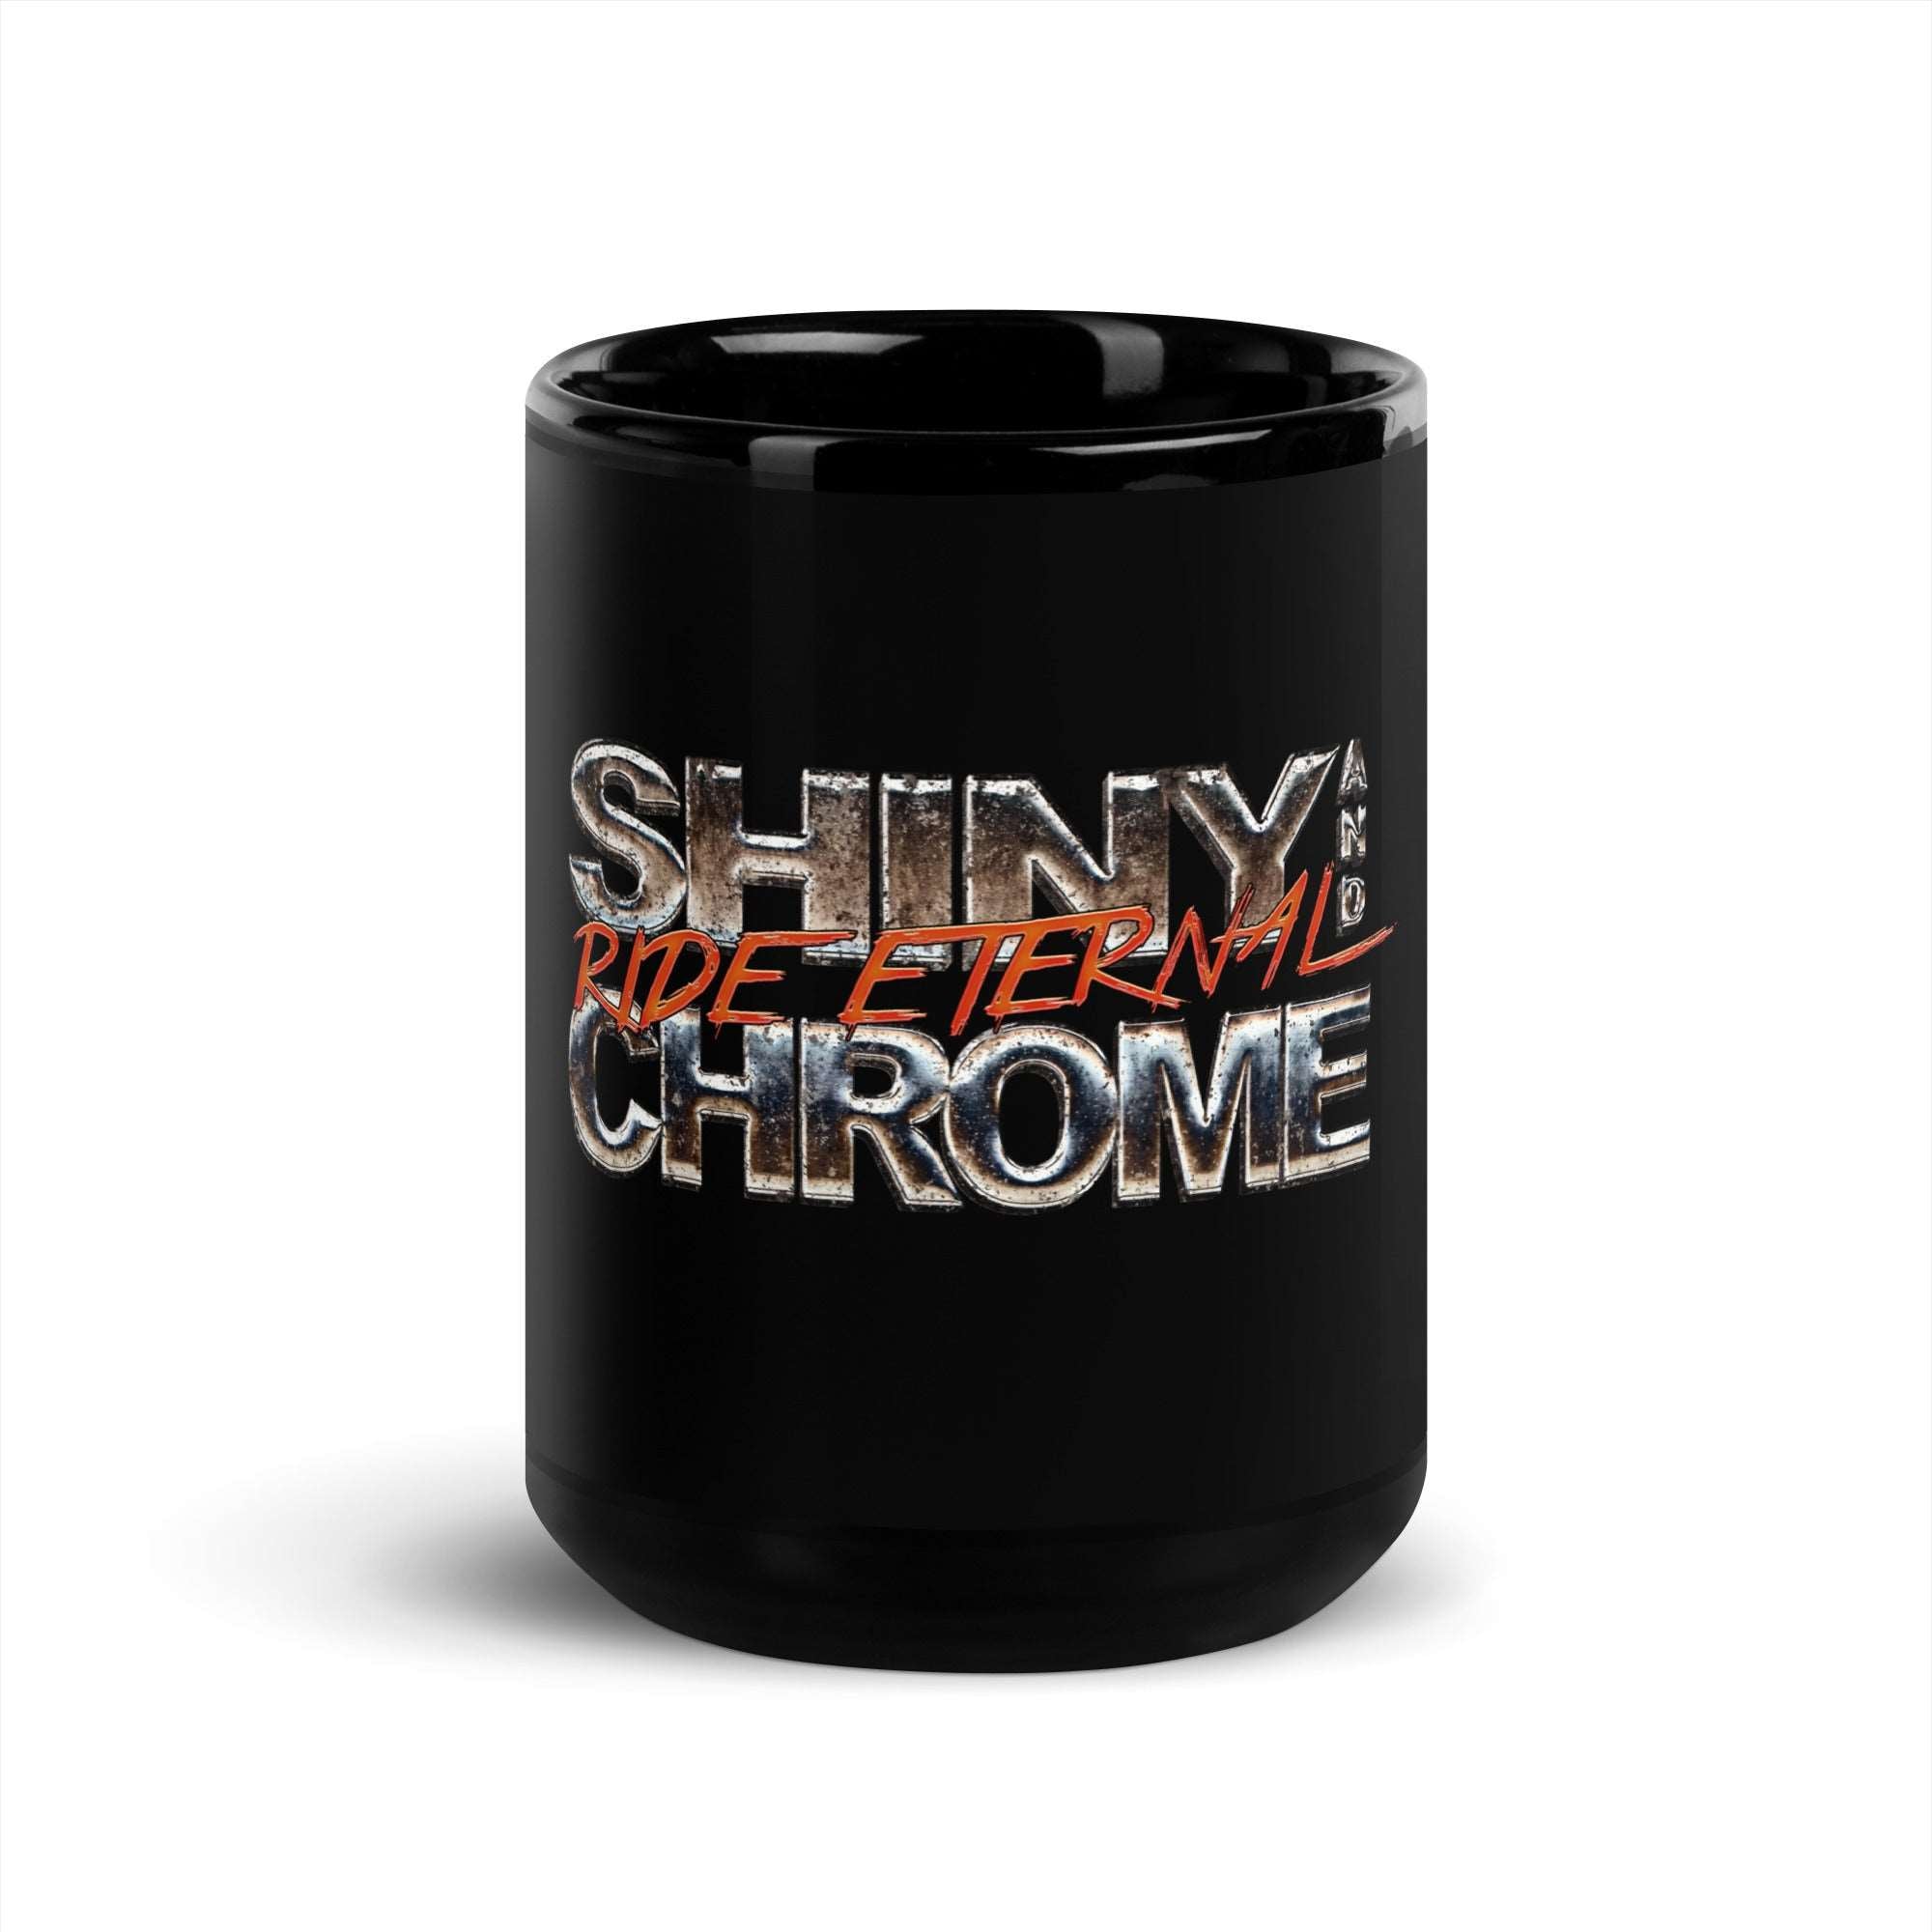 a black coffee mug with shiny chrome lettering